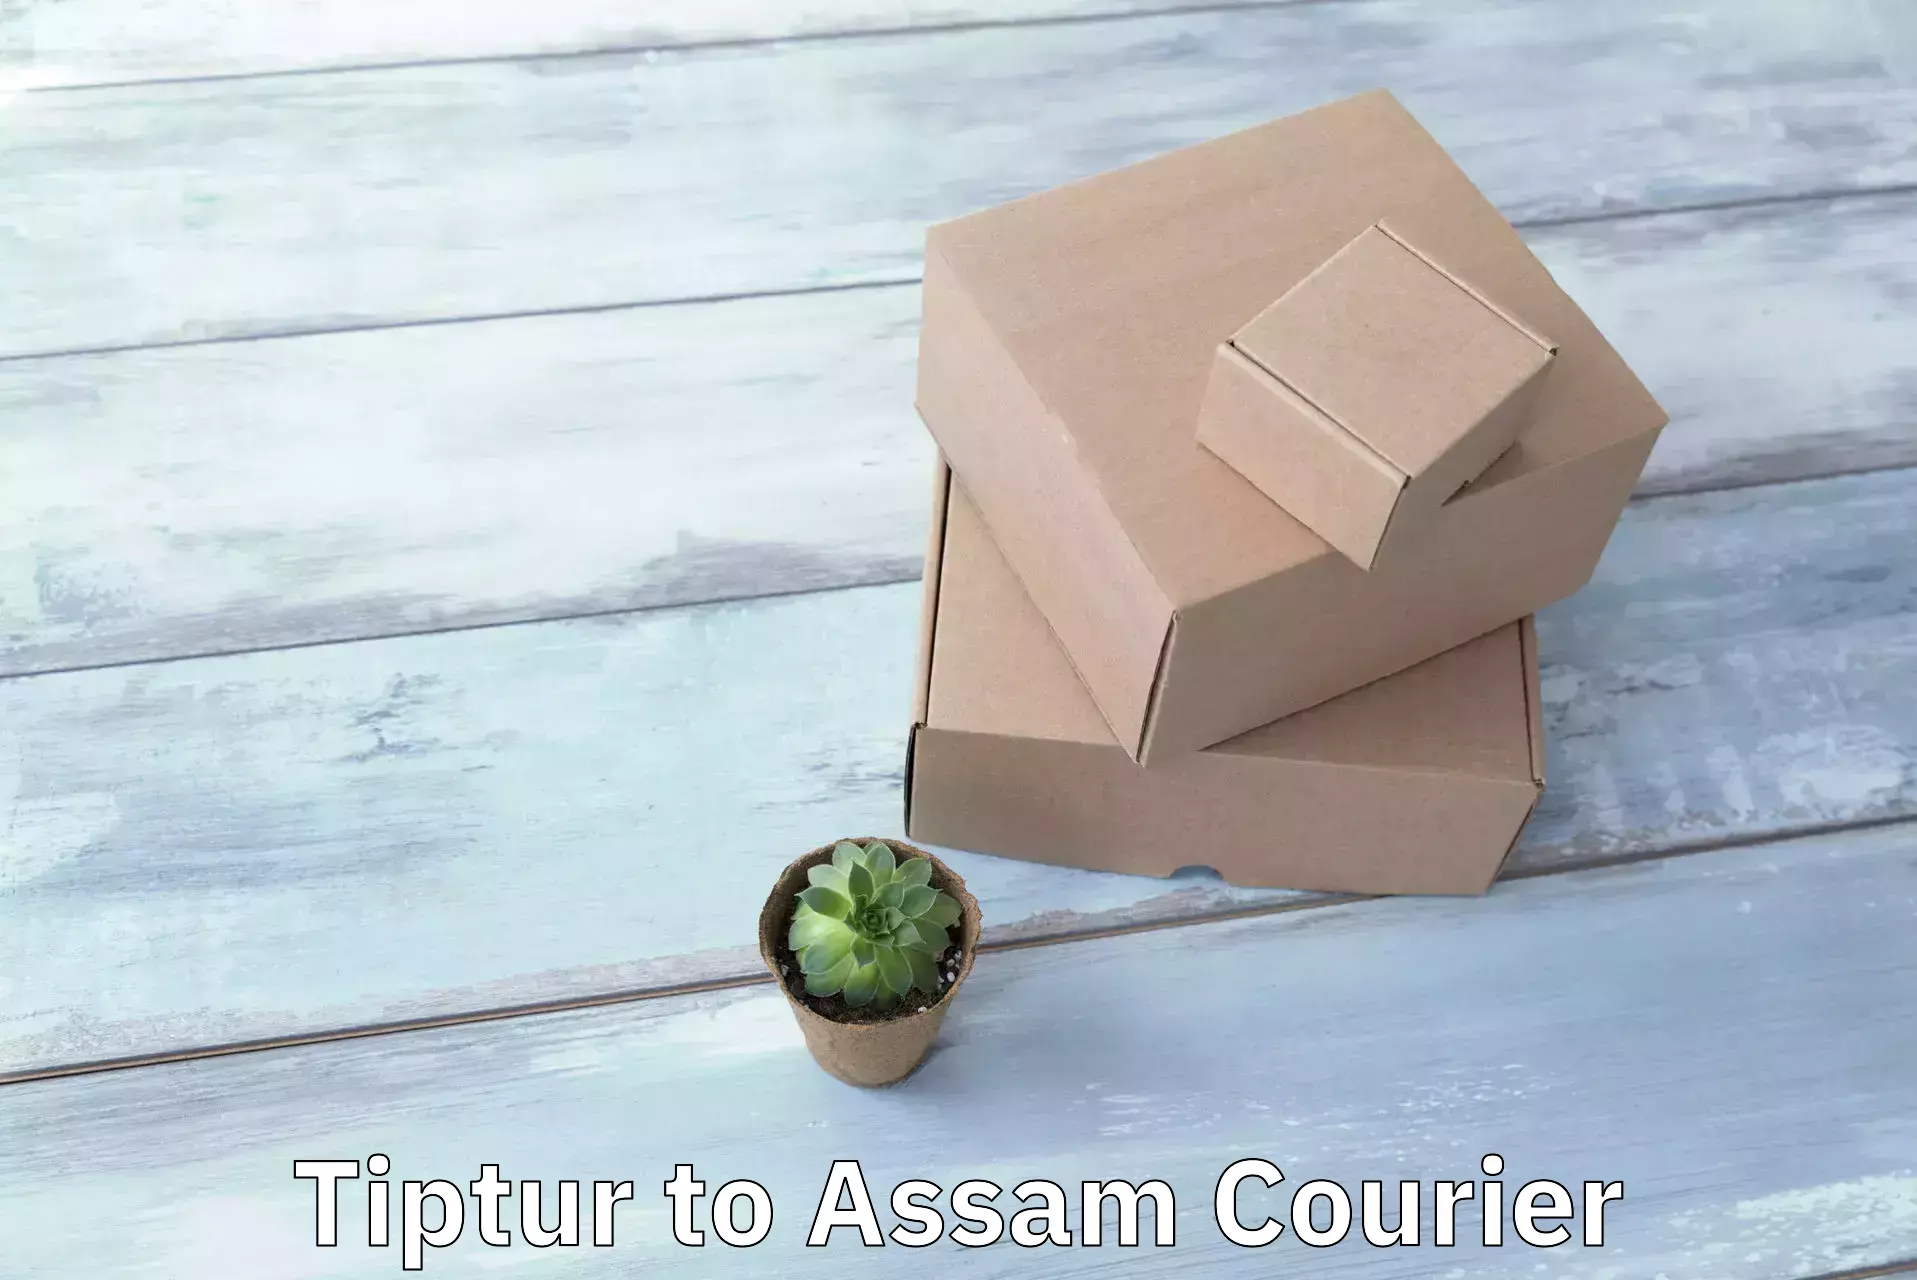 Courier service innovation Tiptur to Assam